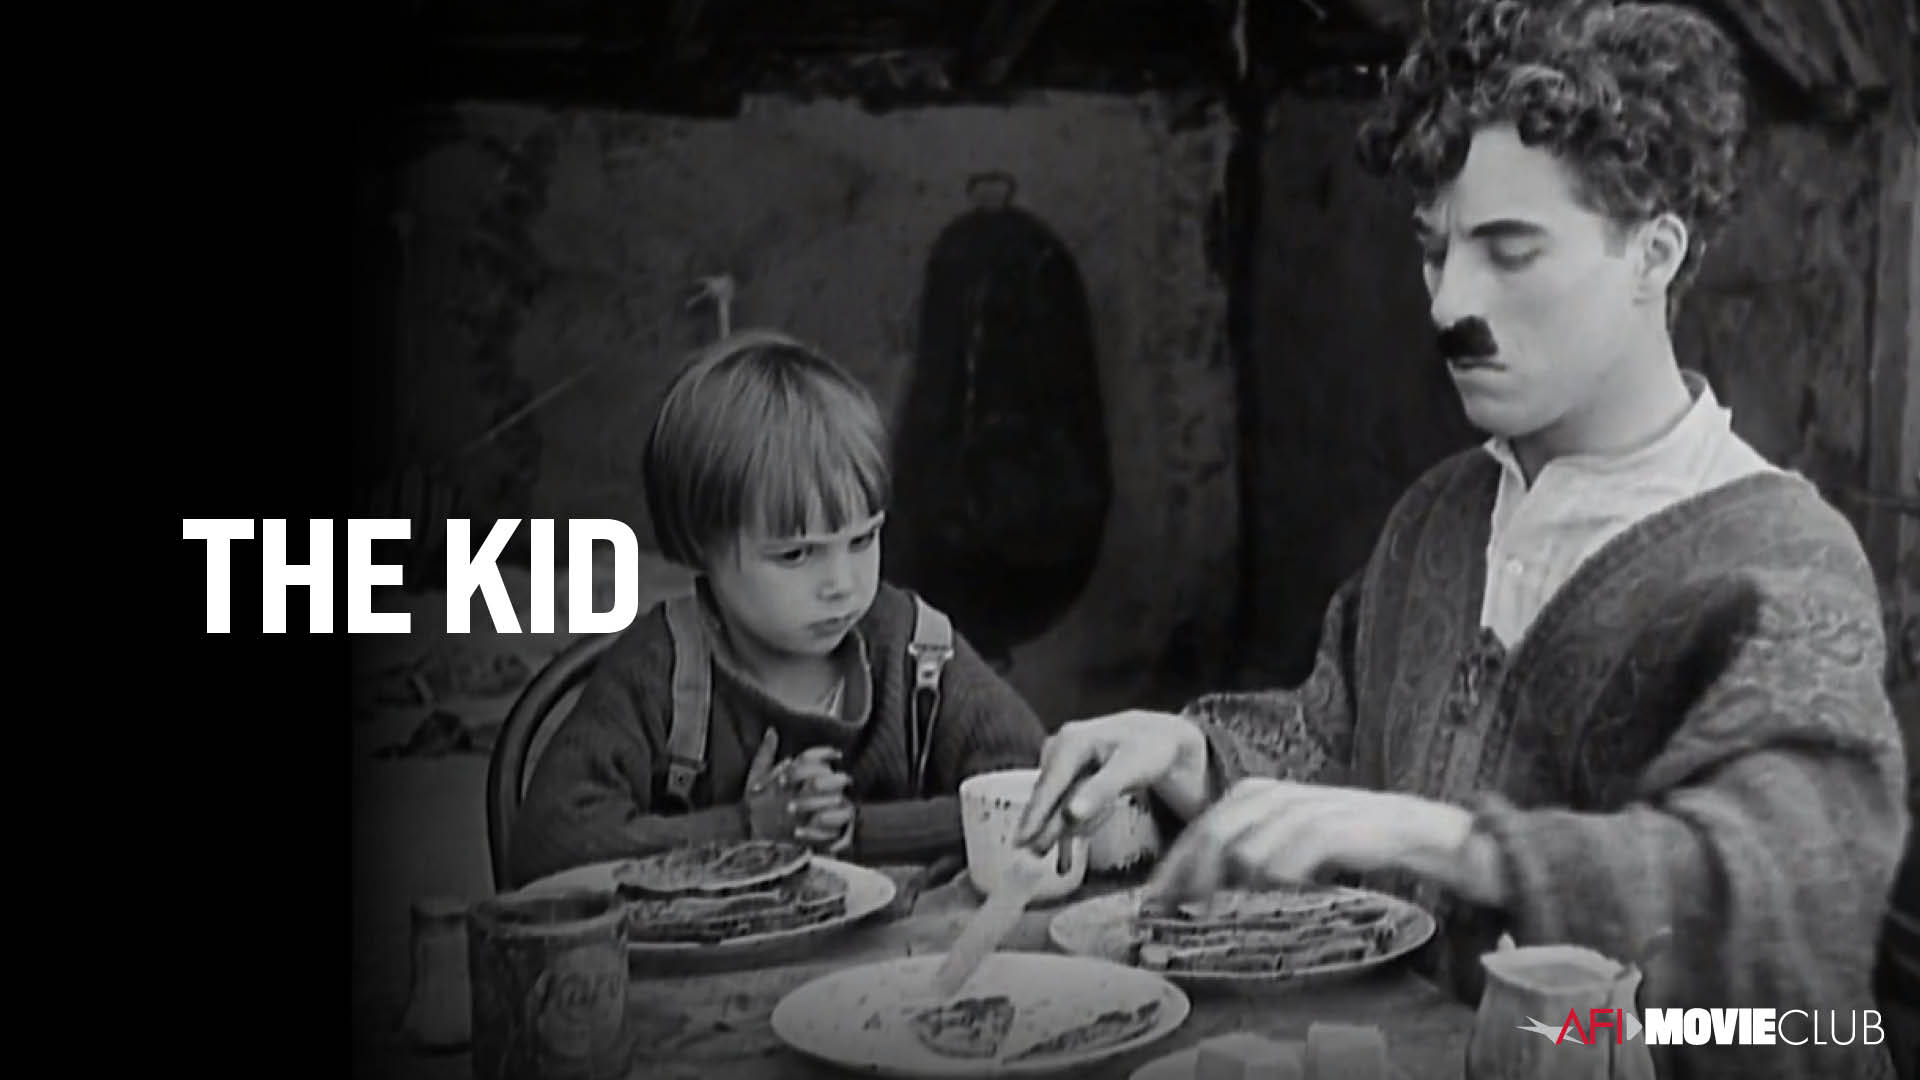 The Kid Film Still - Charles Chaplin and Jackie Coogan